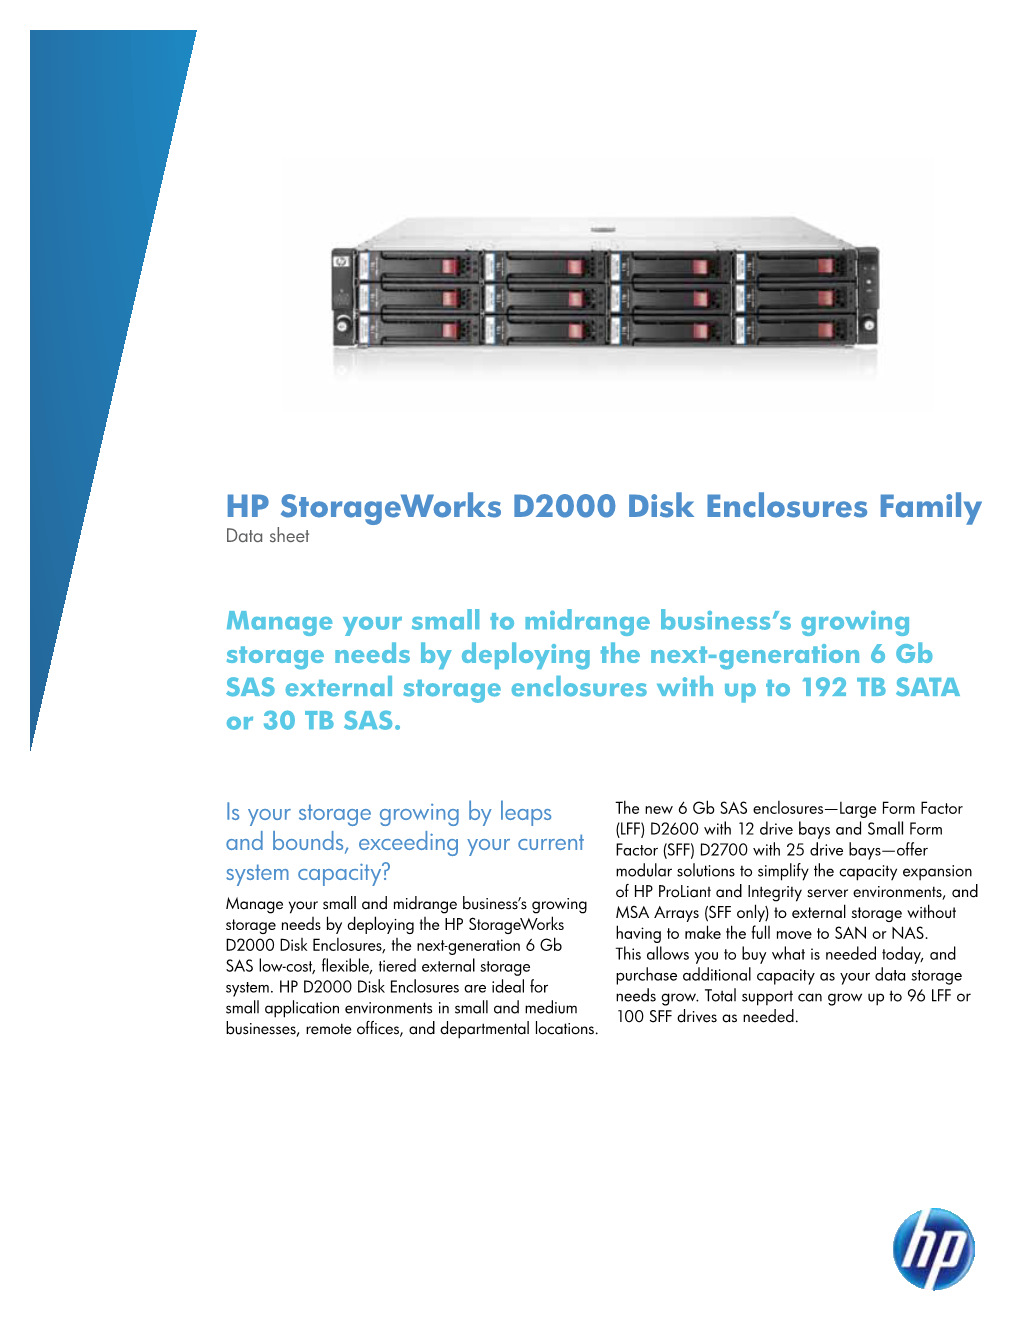 HP Storageworks D2000 Disk Enclosure Family Data Sheet (US